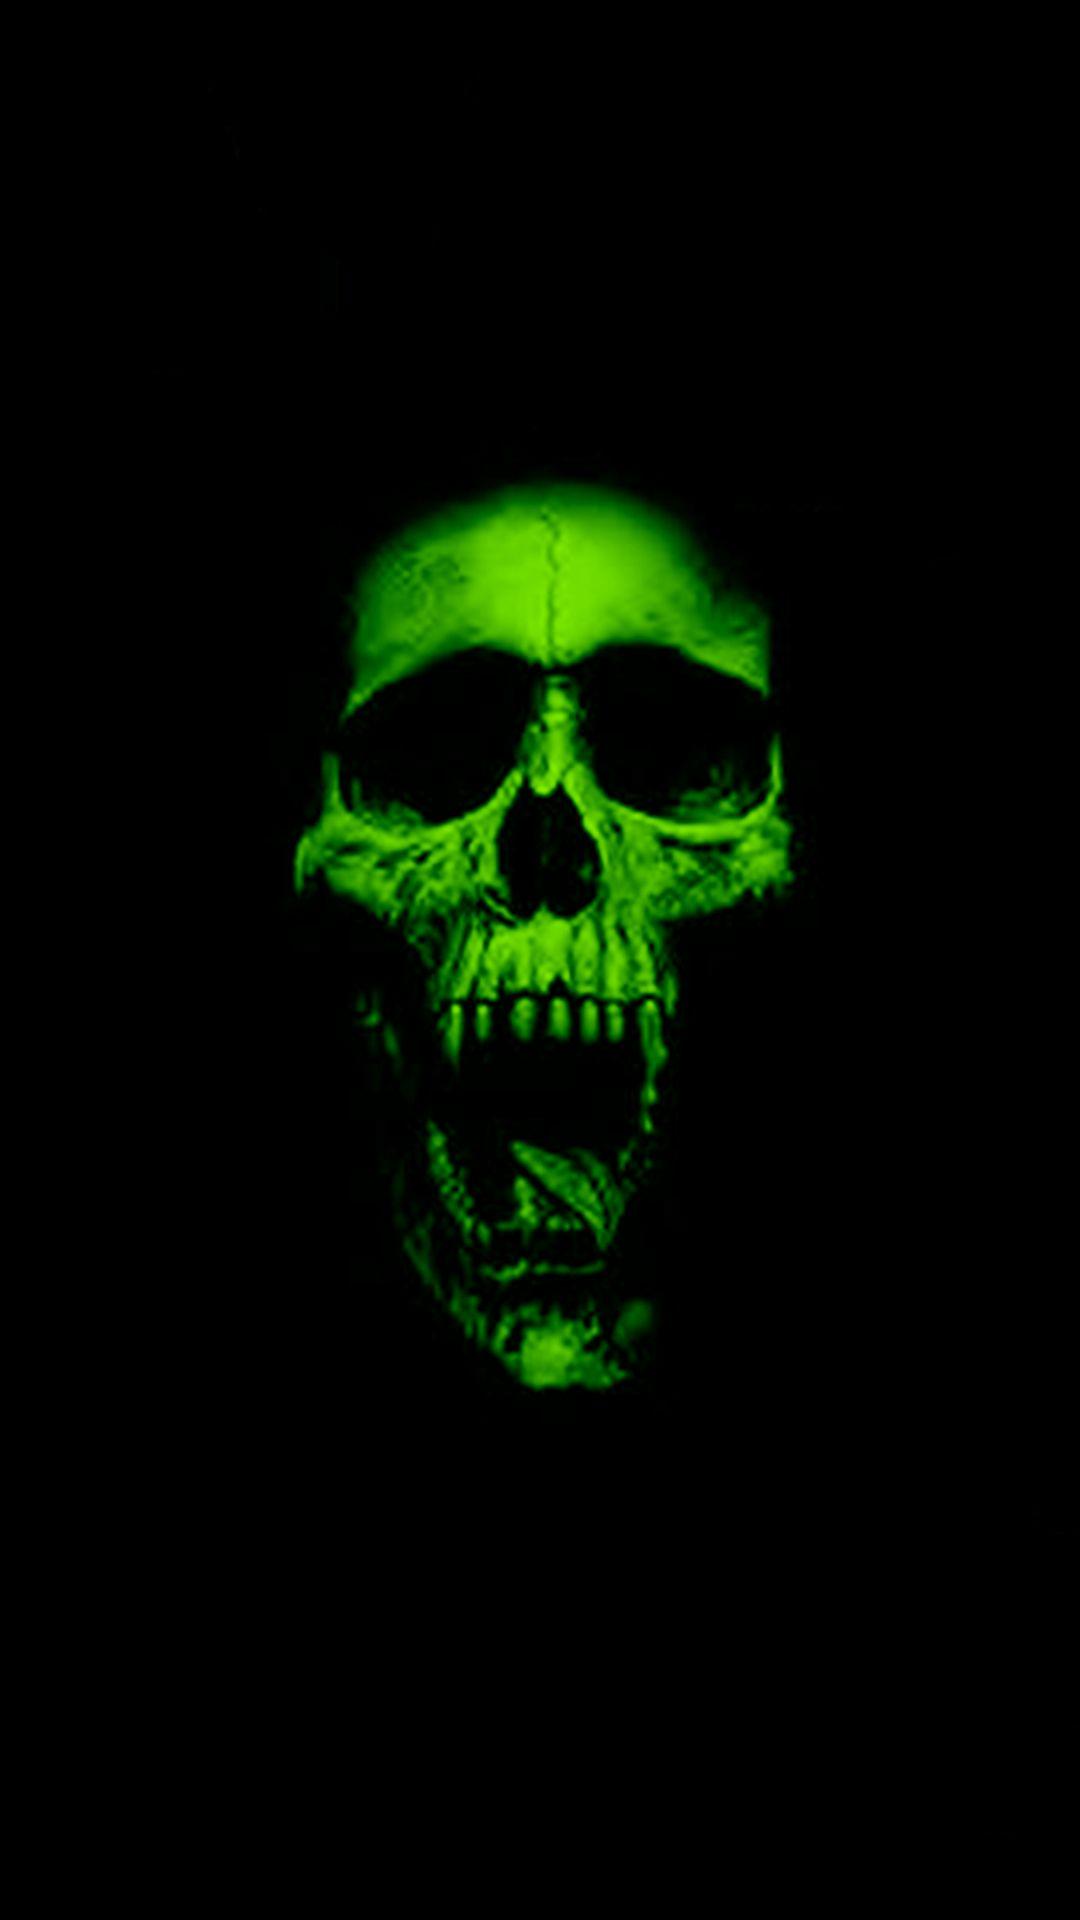  HD  Skull  Wallpapers  1080p Wallpaper  Cave